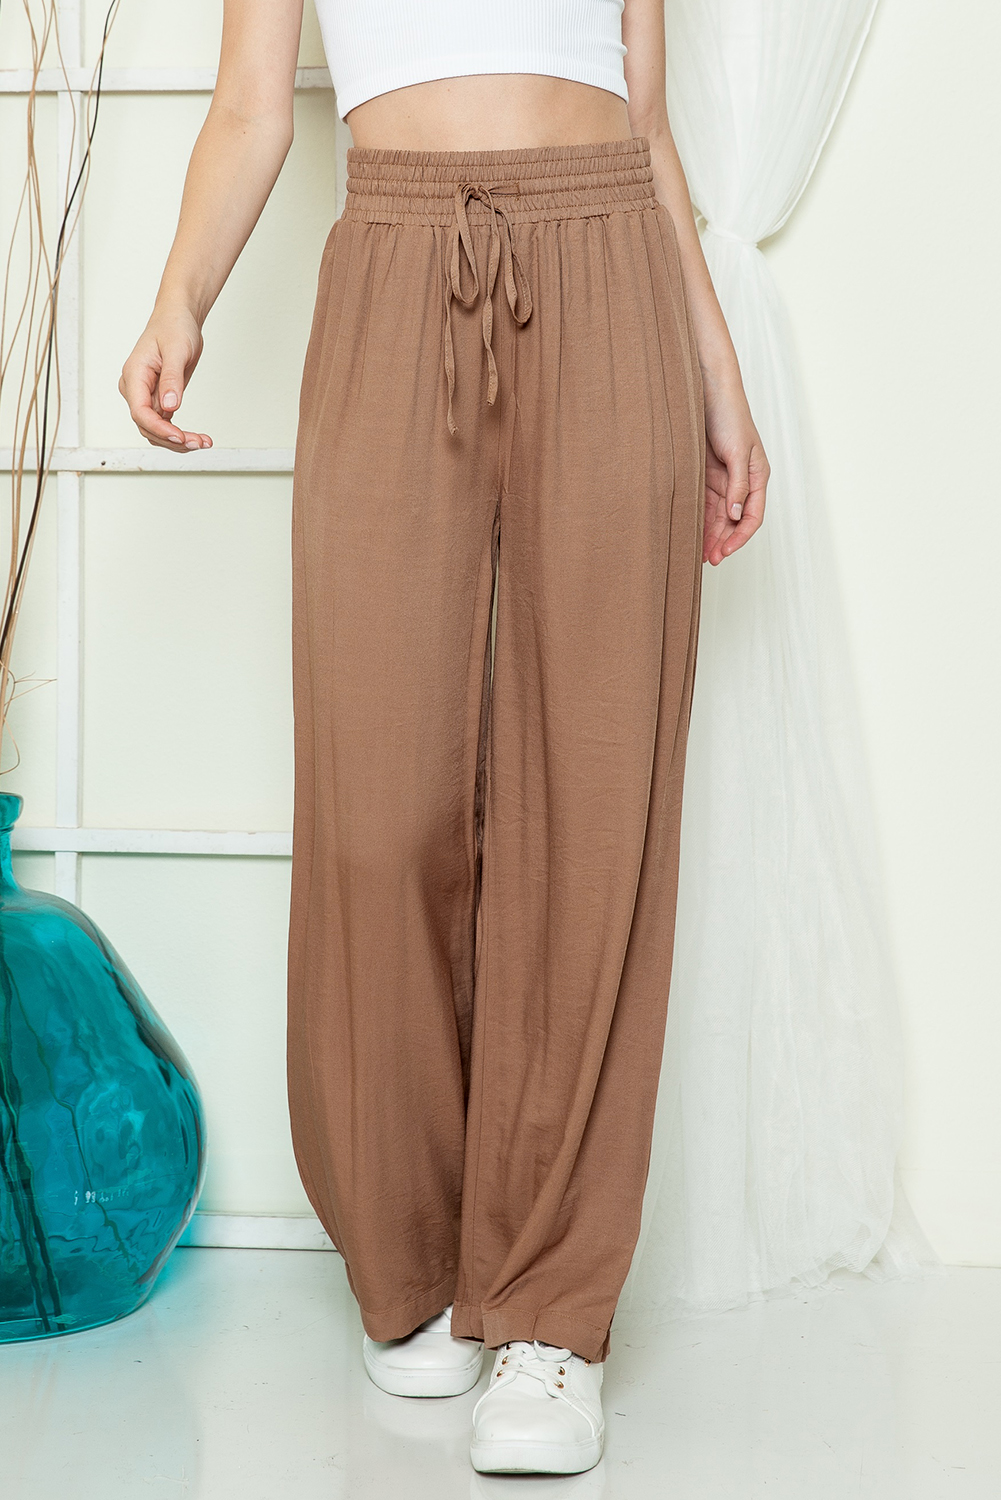 Shewin Wholesale Elegant Brown Casual Drawstring Shirred Elastic Waist Wide Leg PANTS